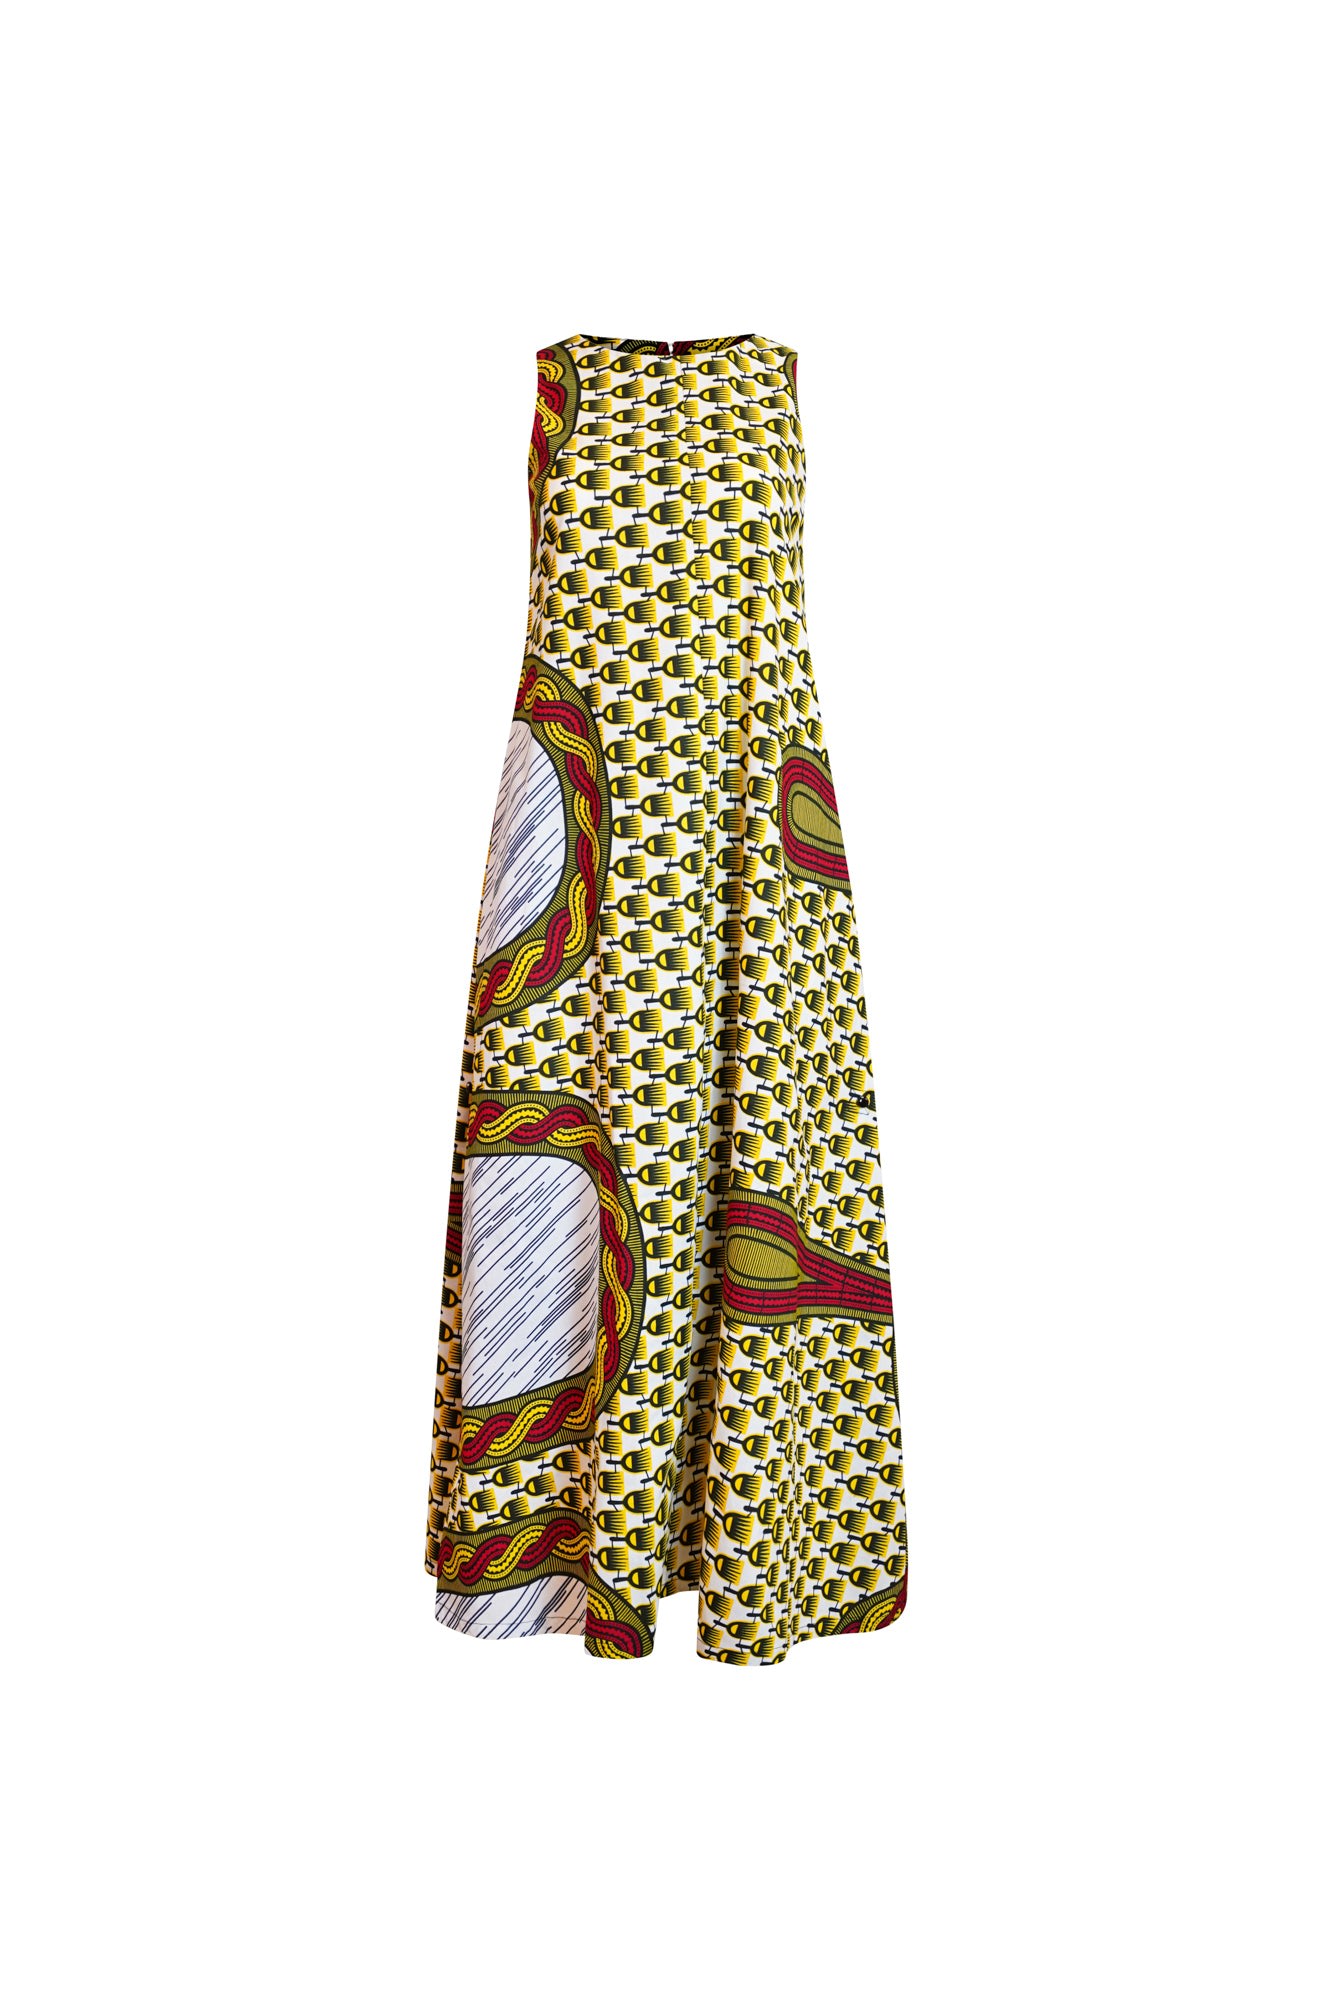 Oliveankara Women's White / Yellow / Orange Esosa Maxi Dress - Rituals White Red & Yellow African Ankara Wax Cot